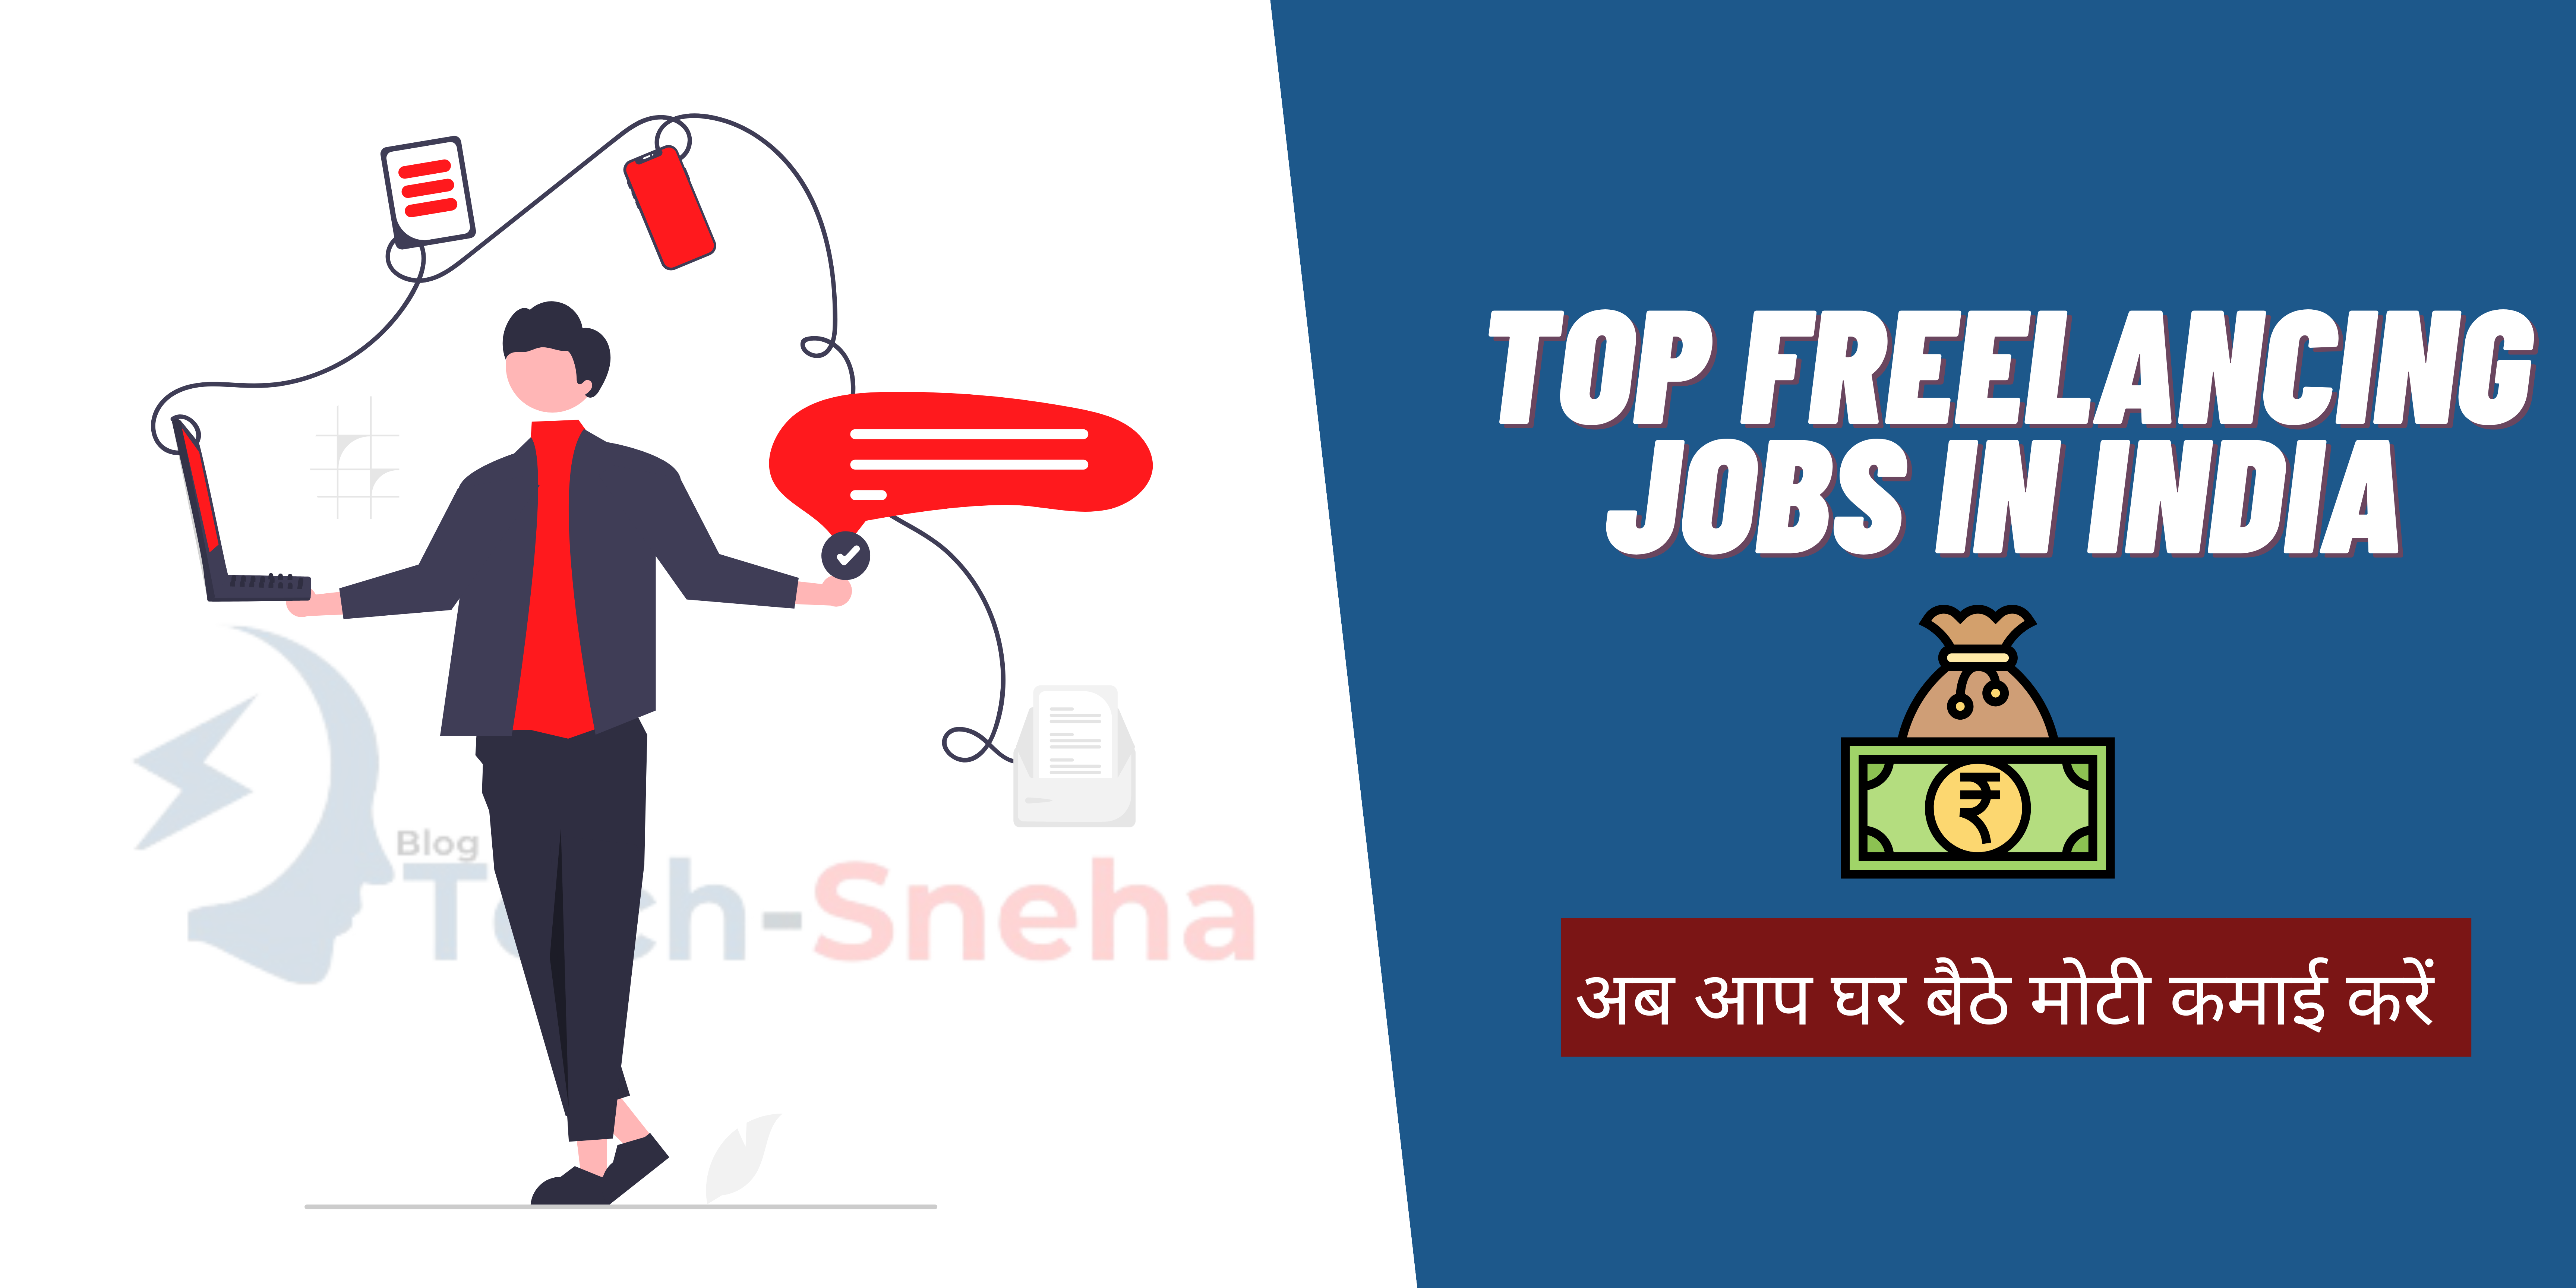 Top Freelancing Jobs in India